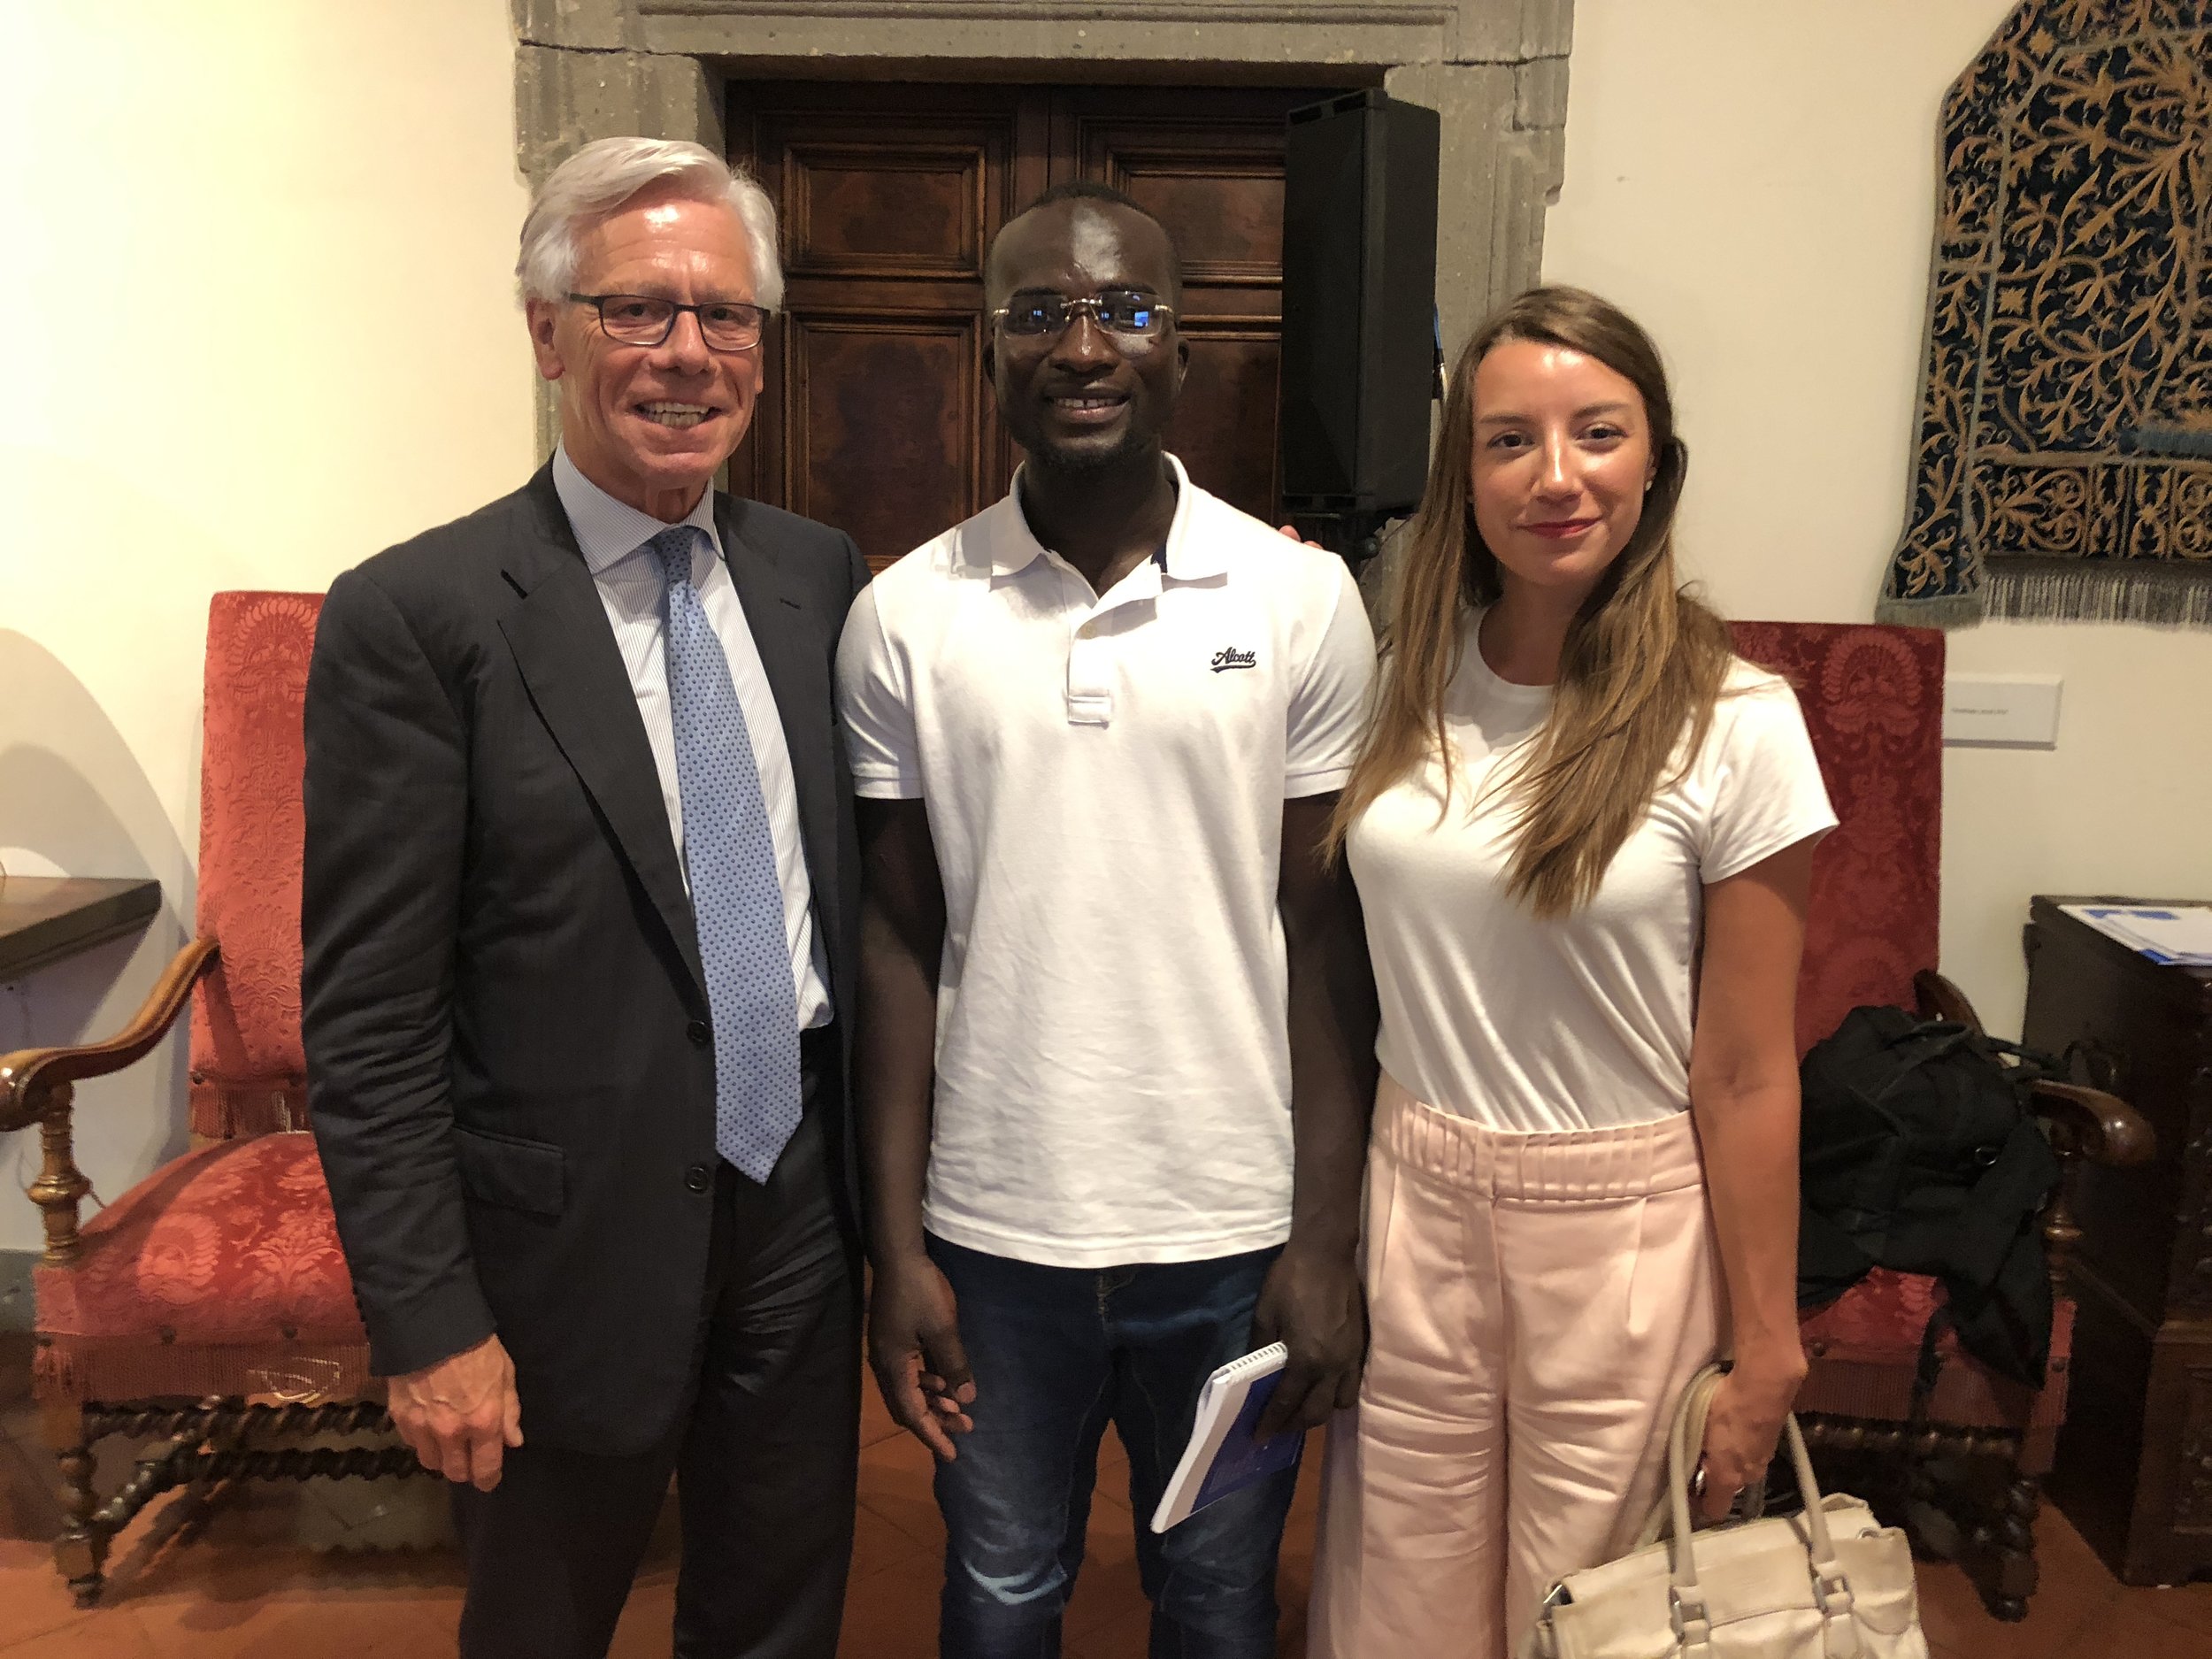  Ambassador Vollebaek, Bakary, and the author at the Embassy of Switzerland, Rome. 11 June 2018. 